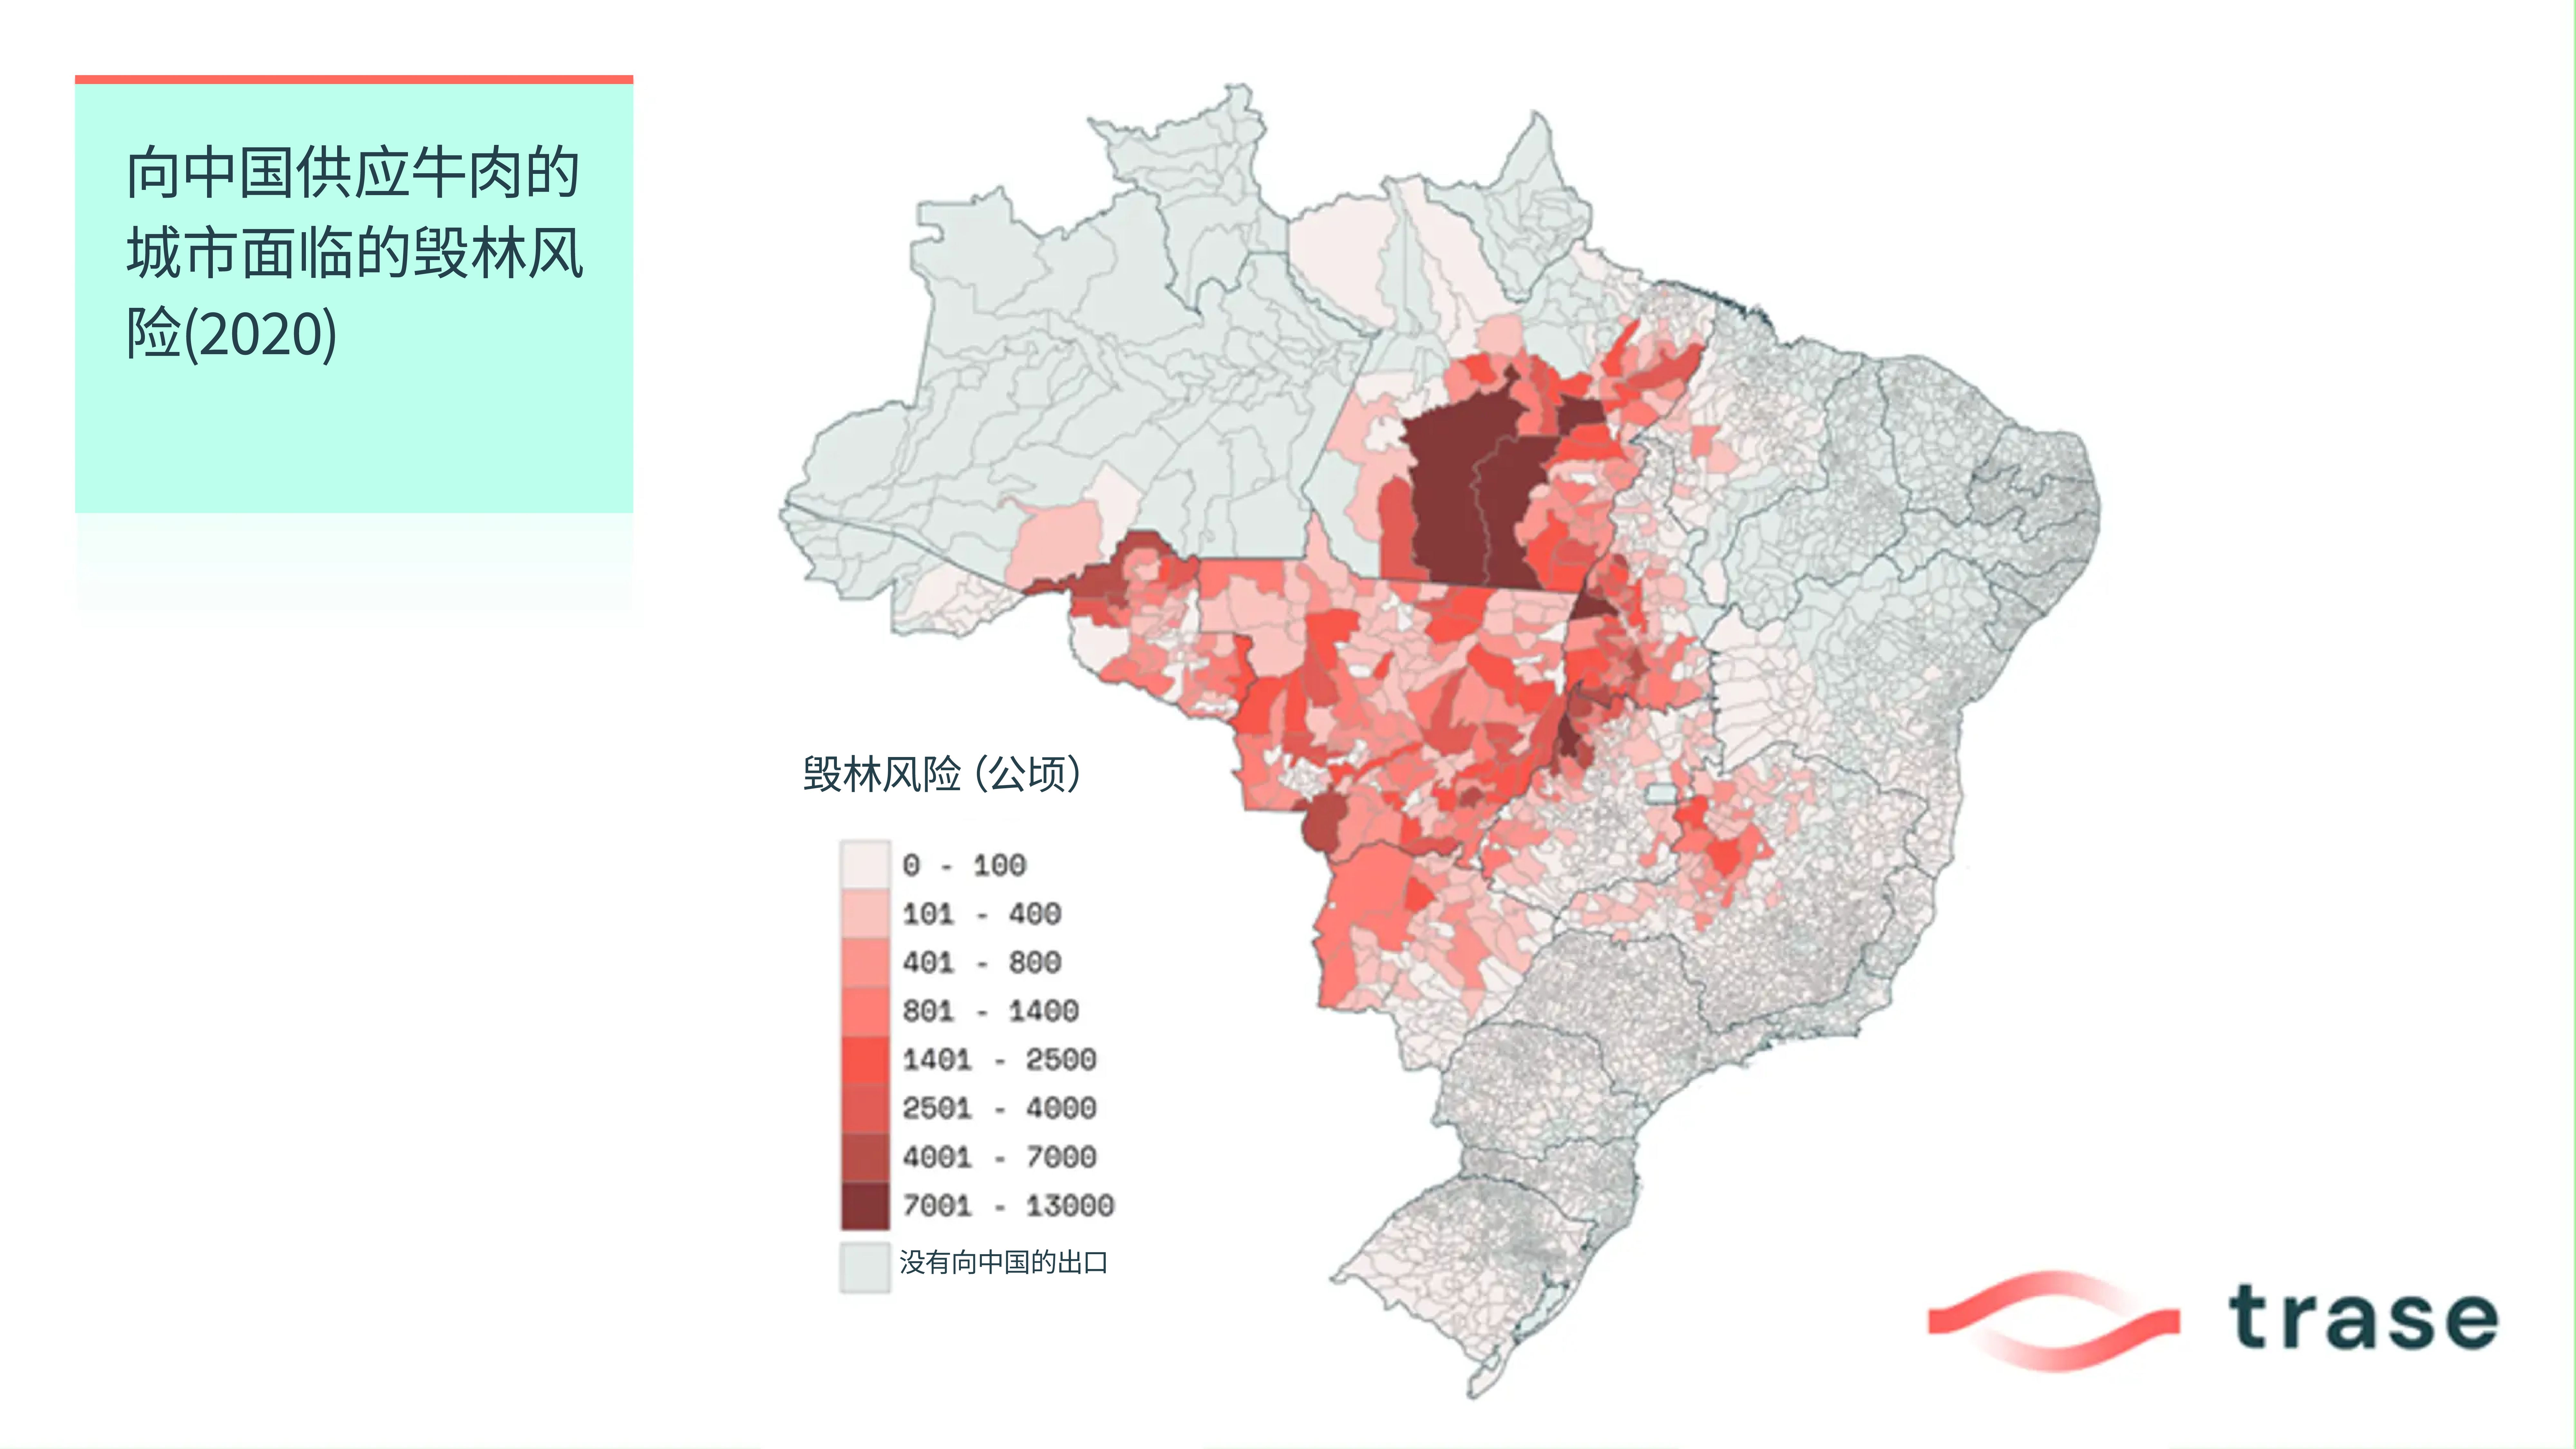 Deforestation exposure by municipalities supplying beef to China (2020)